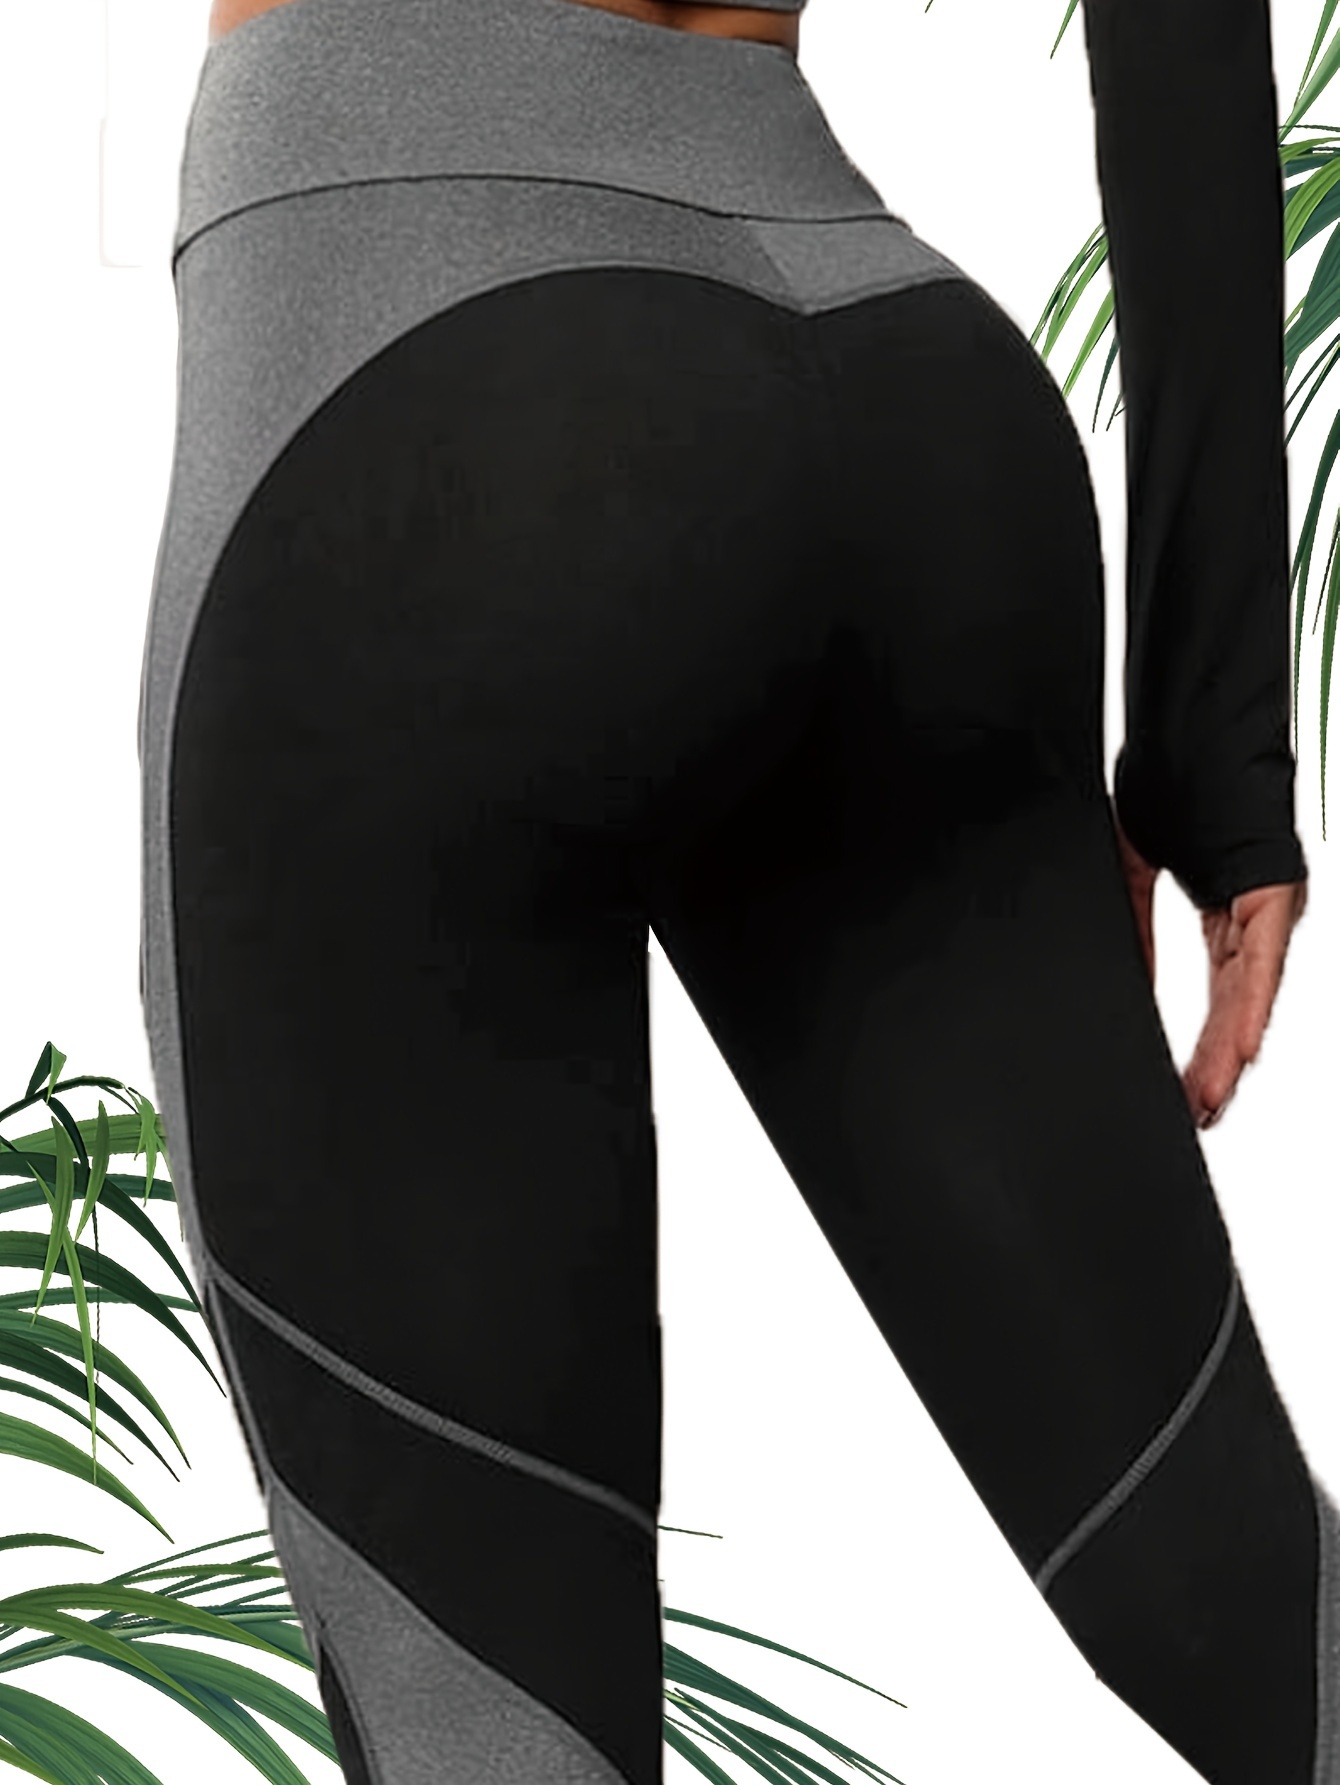 Female Yoga Pants Exercise Workout Gym Elastic Mid-Waist Fitness Legging  Long Trousers Zumba Jogging YG#